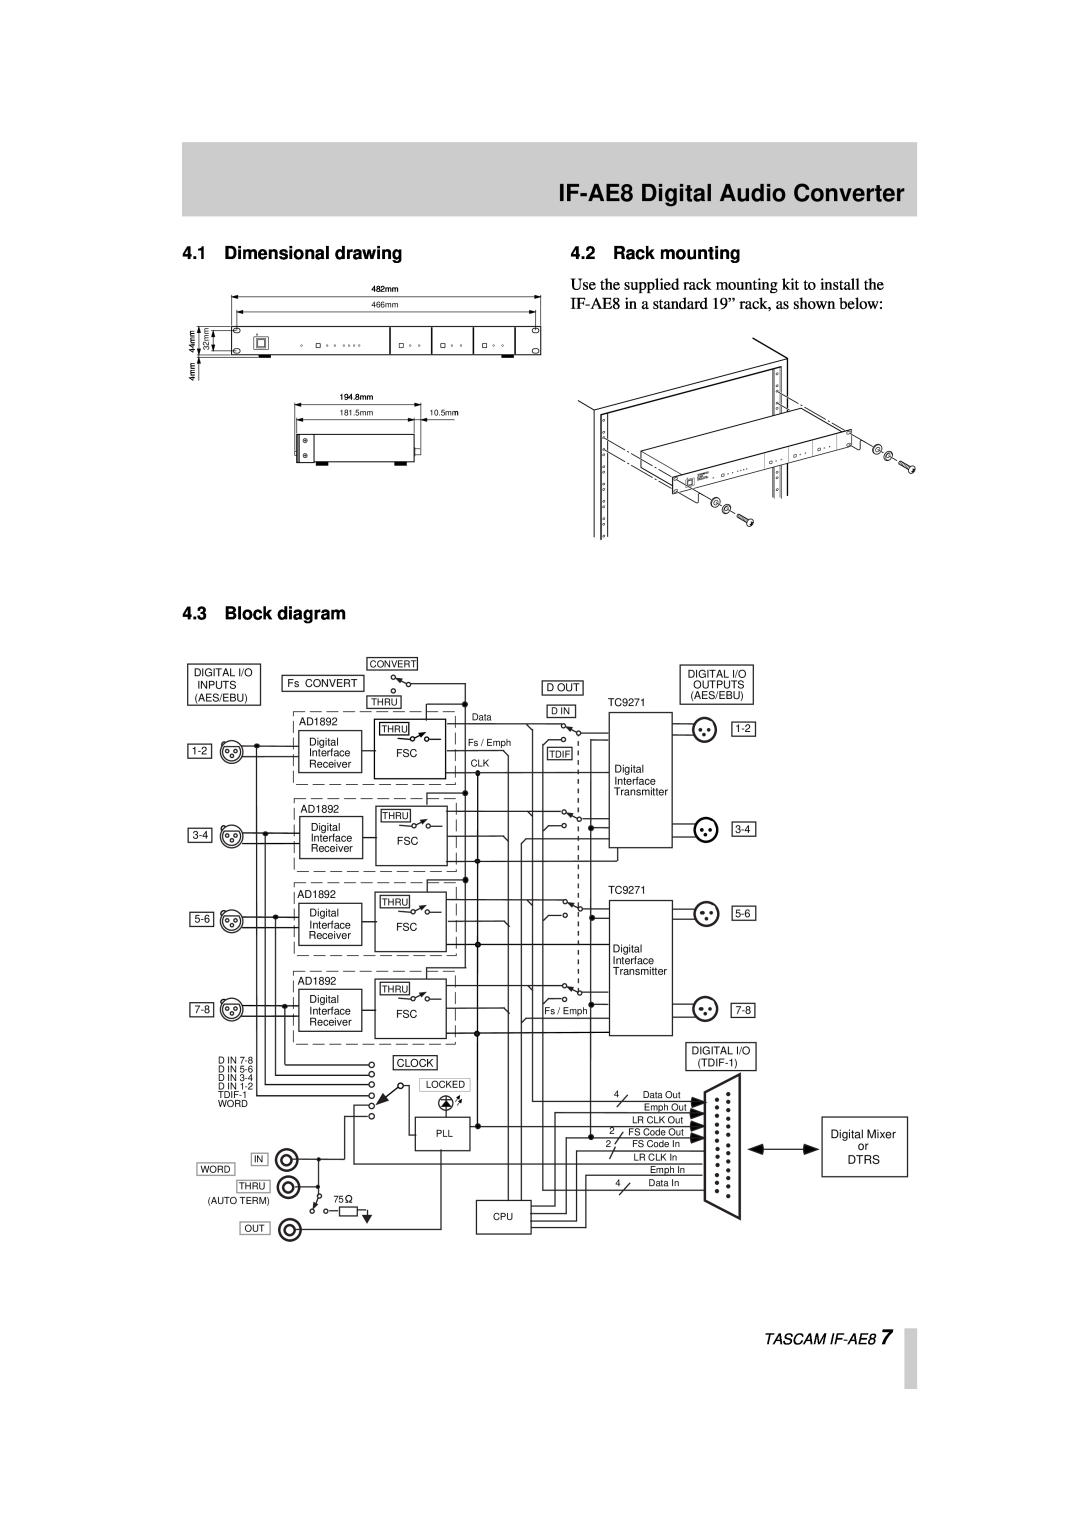 Tascam owner manual Dimensional drawing, Rack mounting, Block diagram, IF-AE8Digital Audio Converter, TASCAM IF-AE8 